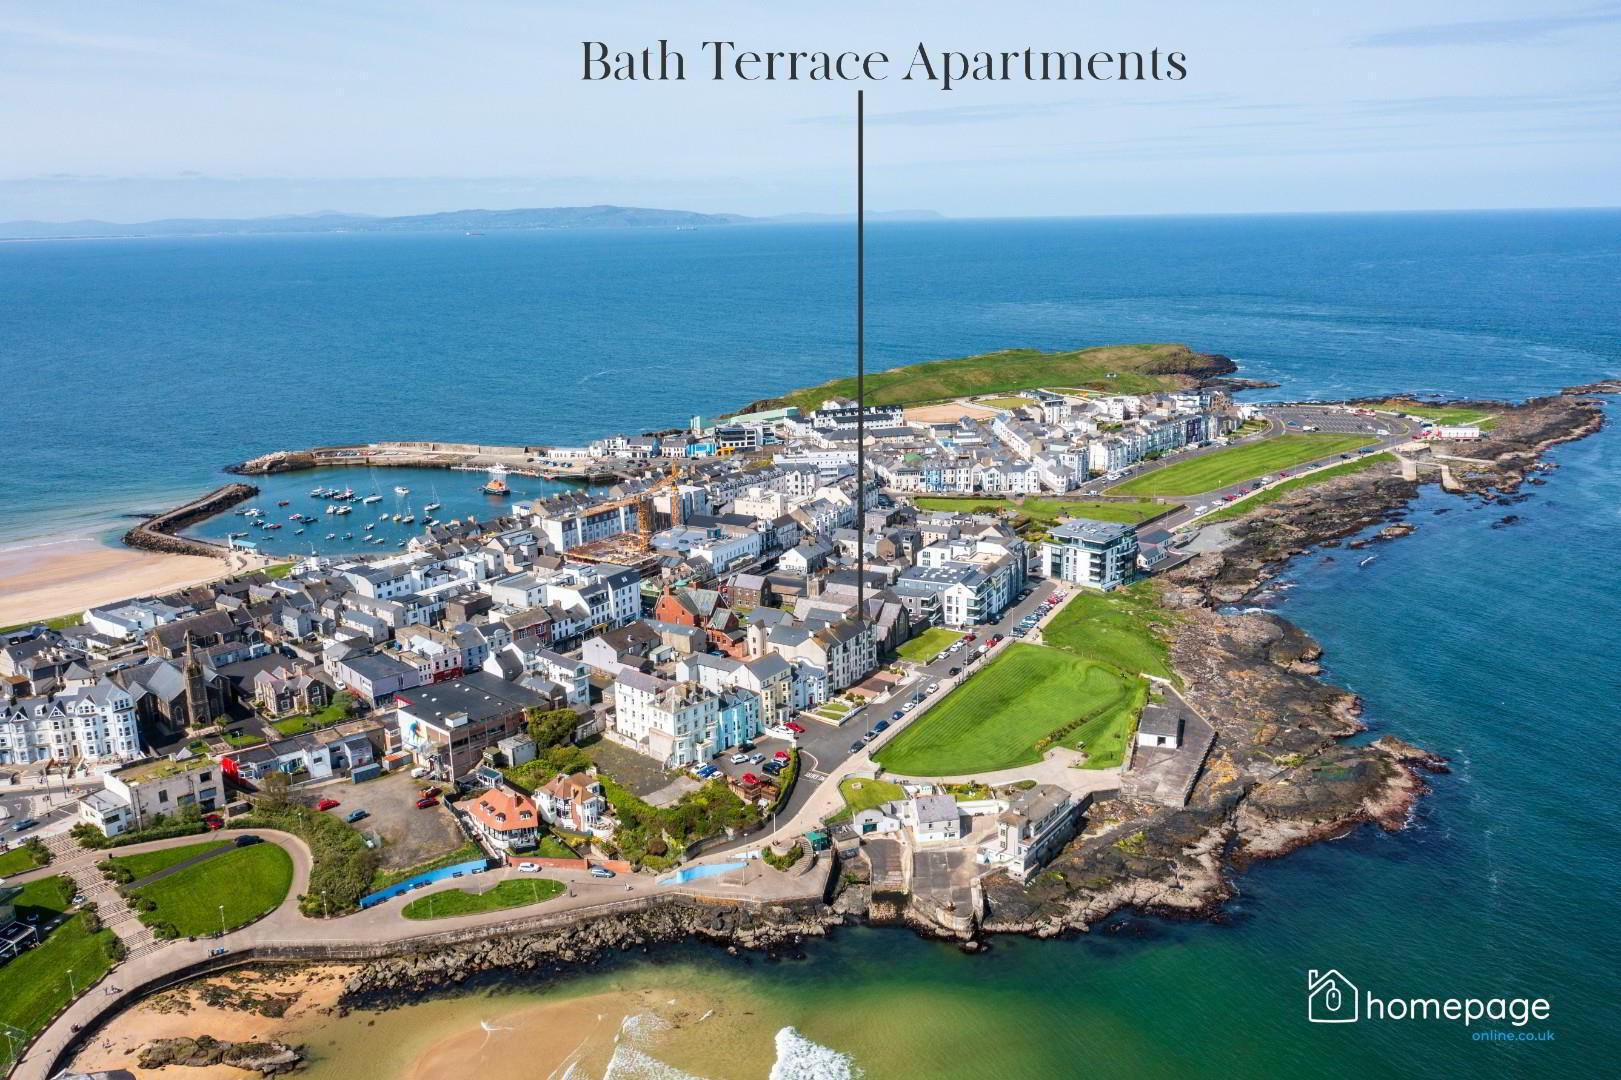 20 Bath Terrace Apartments